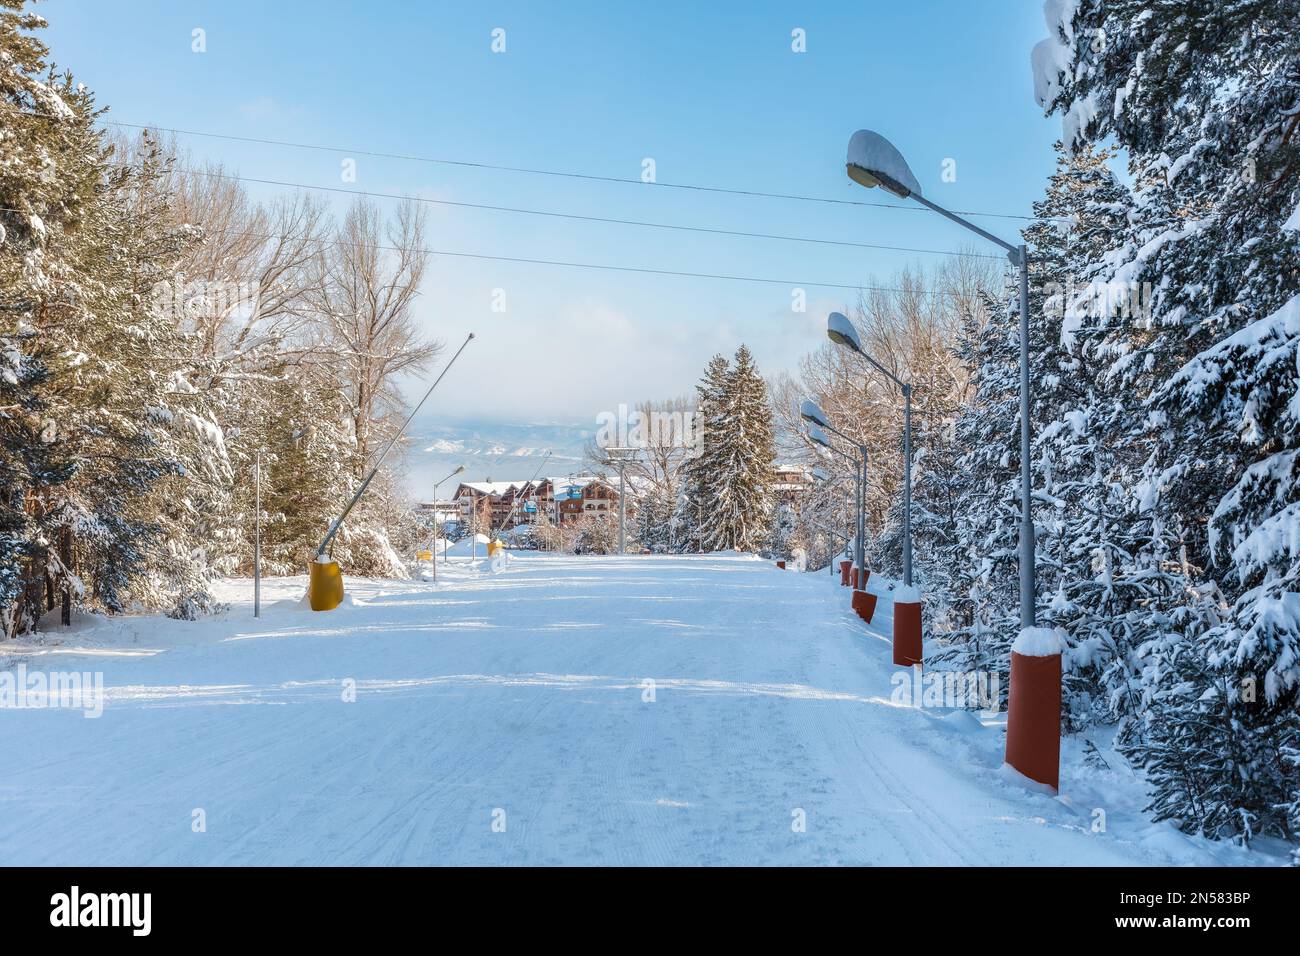 Bansko, Bulgaria bulgarian winter resort with ski slope, lift cabins and gondola station Stock Photo